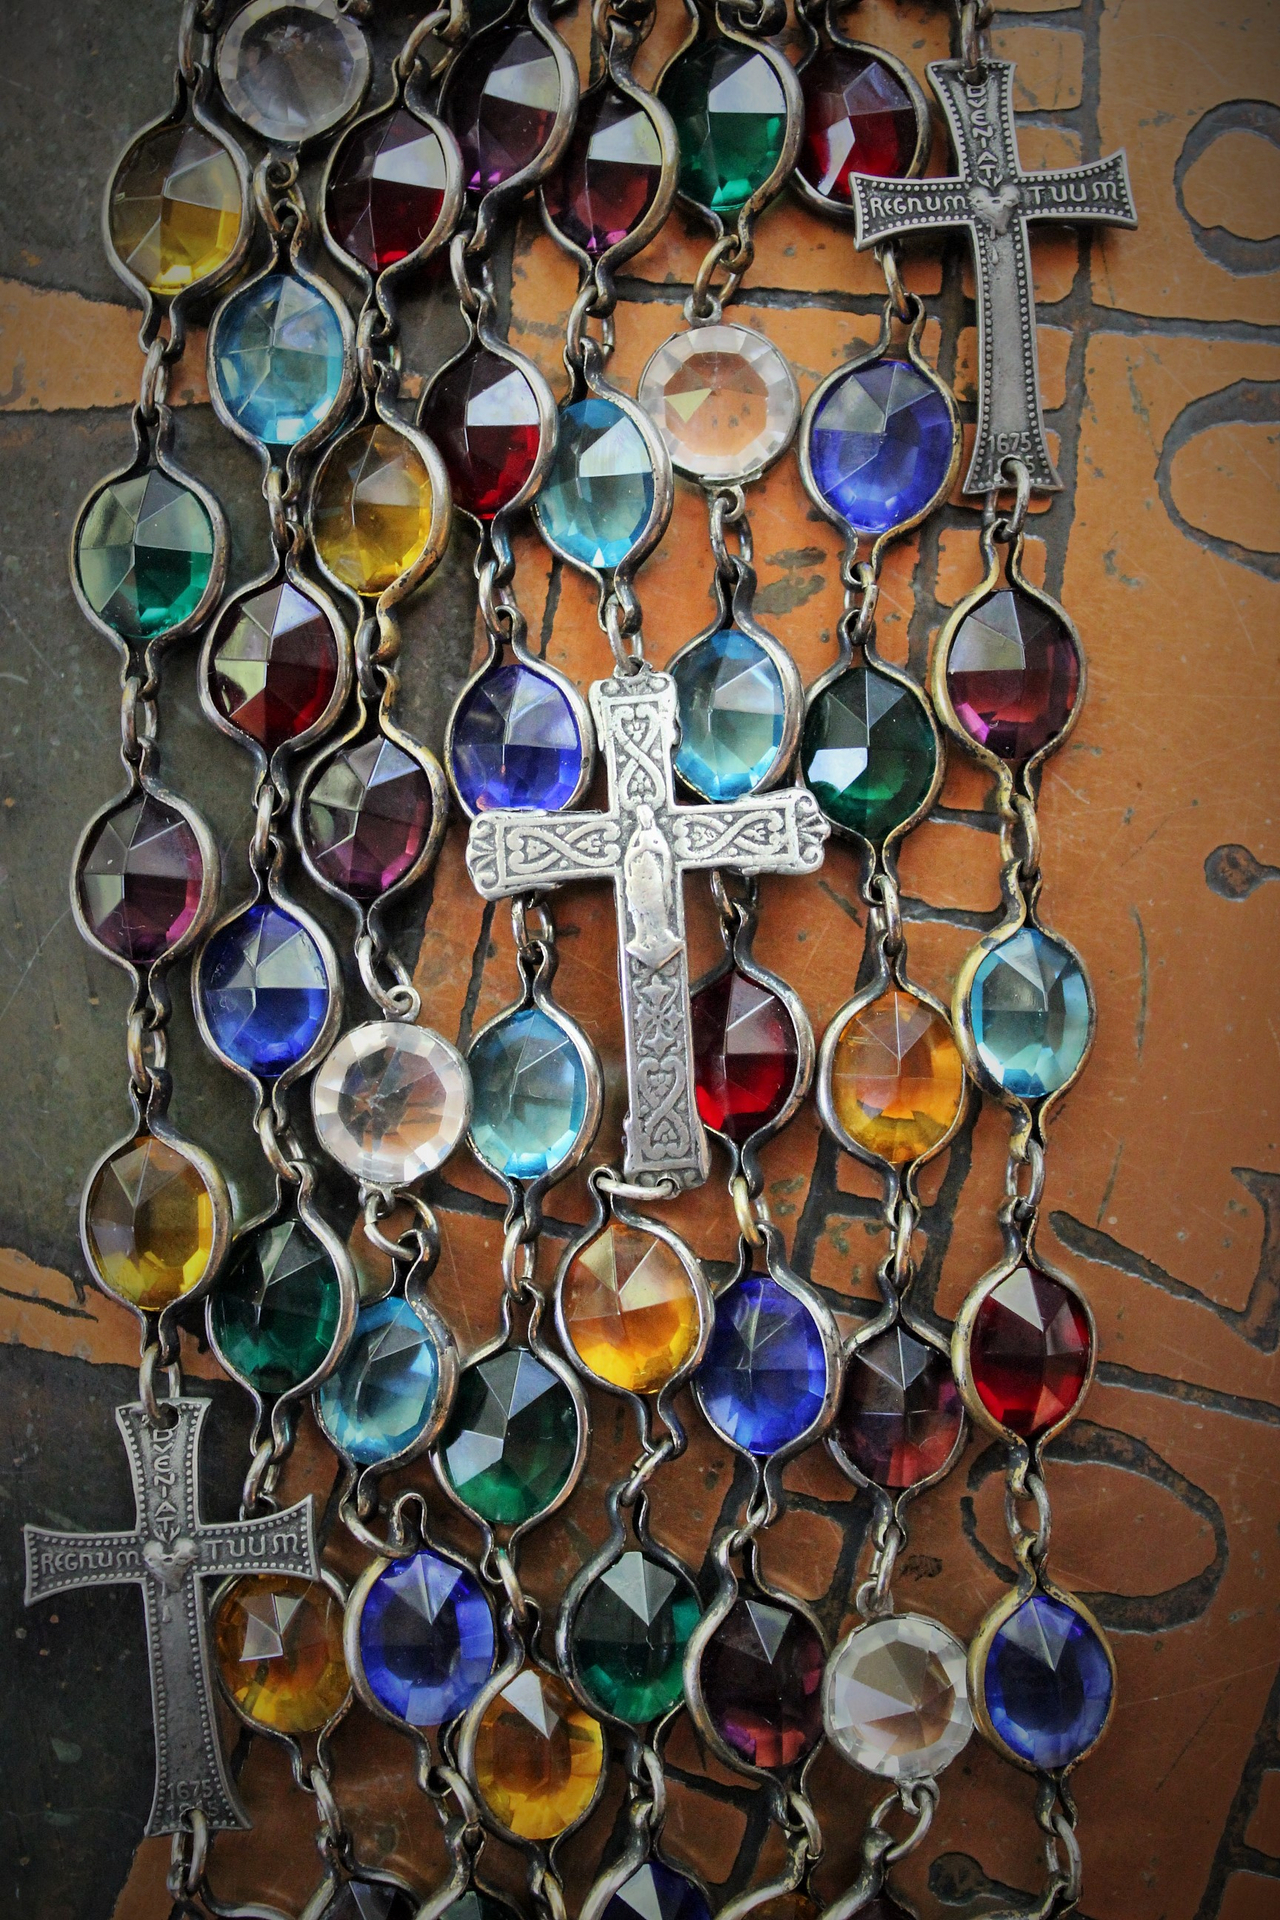 Unique Multi Color Bezel Set Faceted Glass 8 Strand Bracelet w/French Crosses and Antique Foxtail Chain